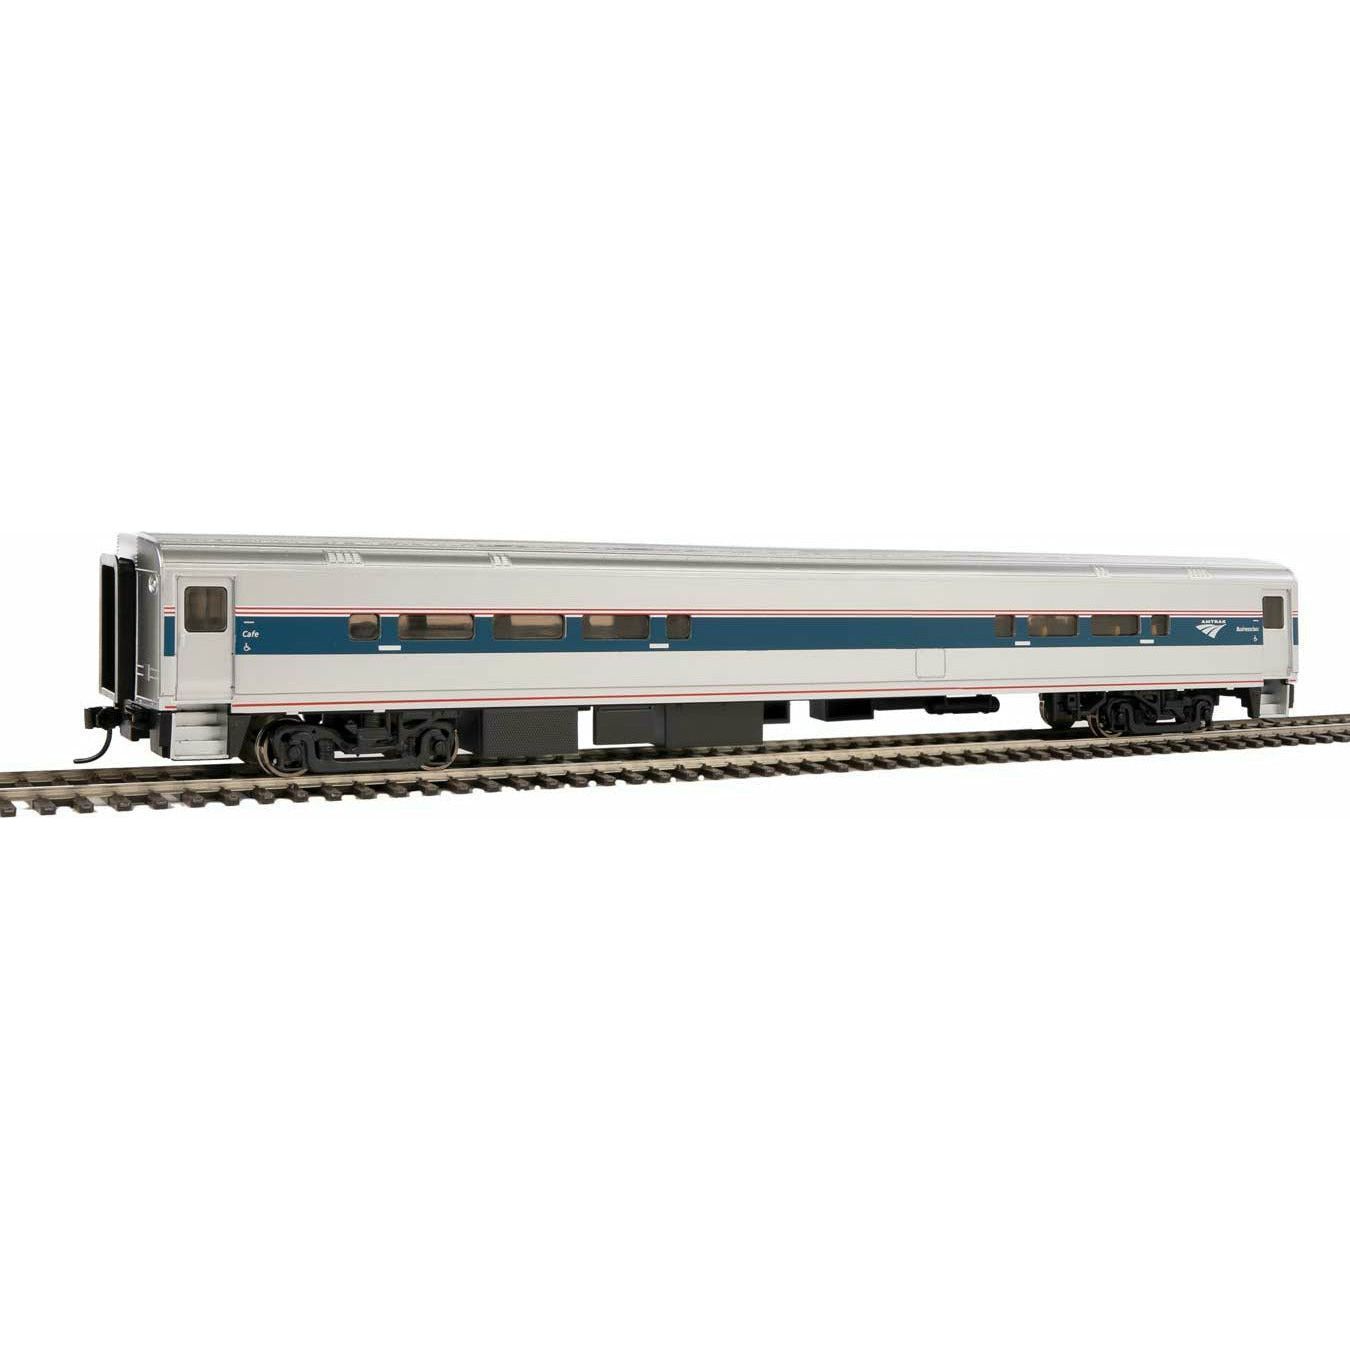 Walthers Mainline, HO Scale, 910-31052, Horizon Fleet Food Service Car, Amtrak, Phase VI